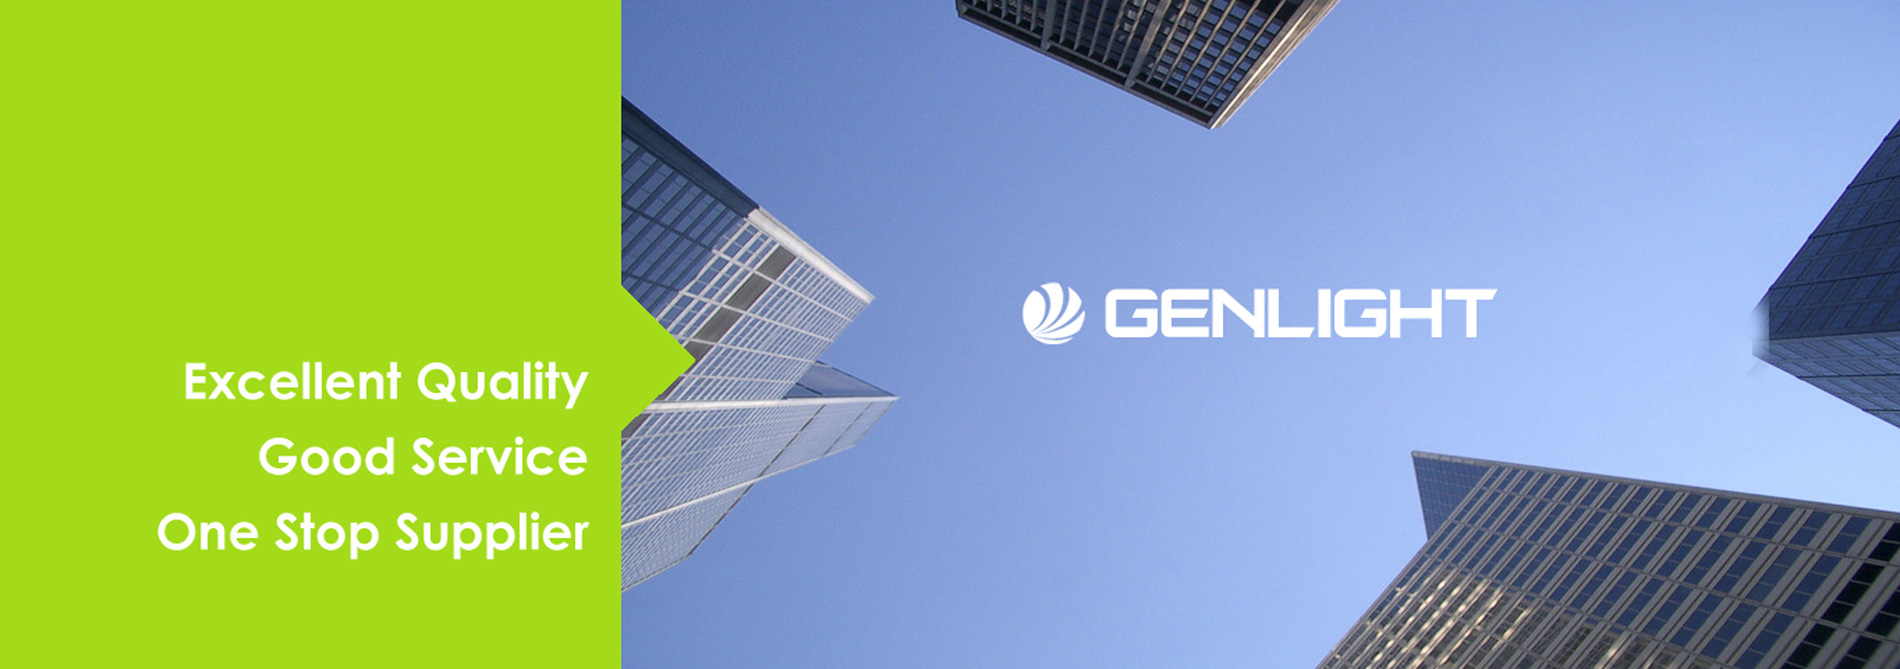 Genlight International Business Co., Ltd.